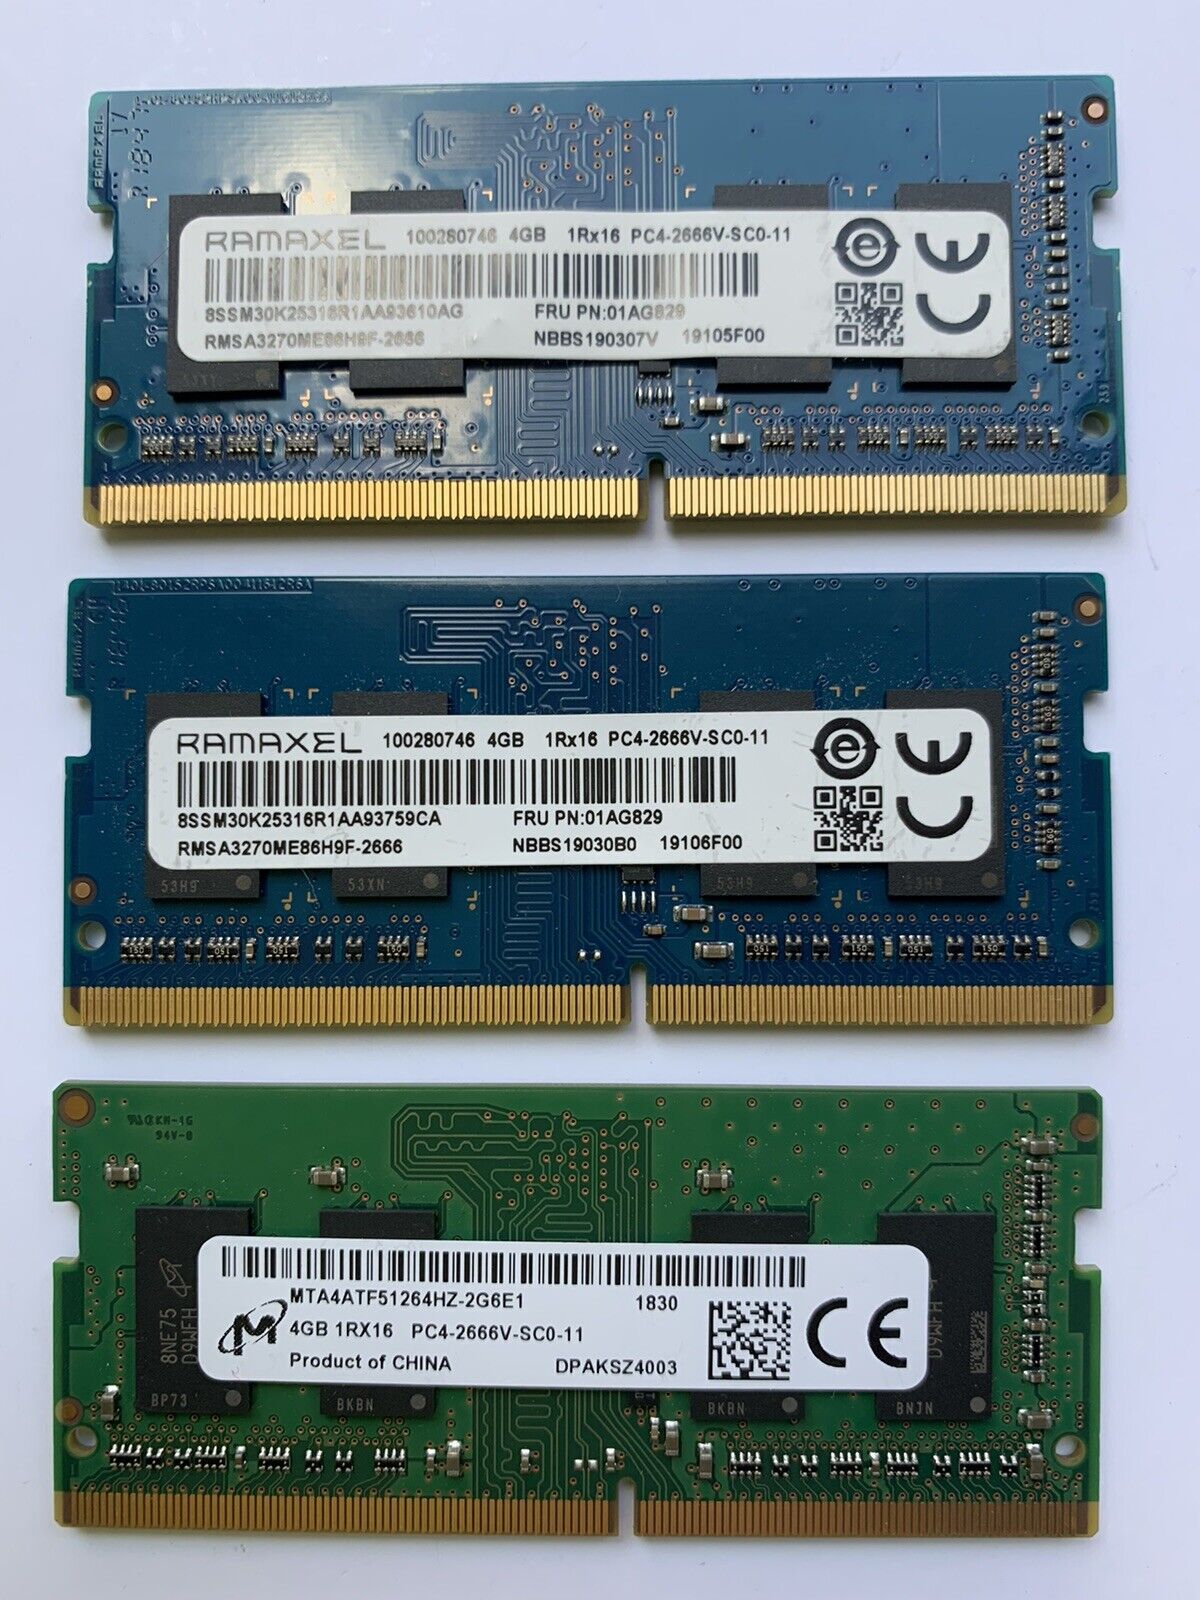 Lot of 3 modules x 4GB Micron/Ramaxel PC4-2666V 1Rx16 Laptop Memory SODIMM Ram